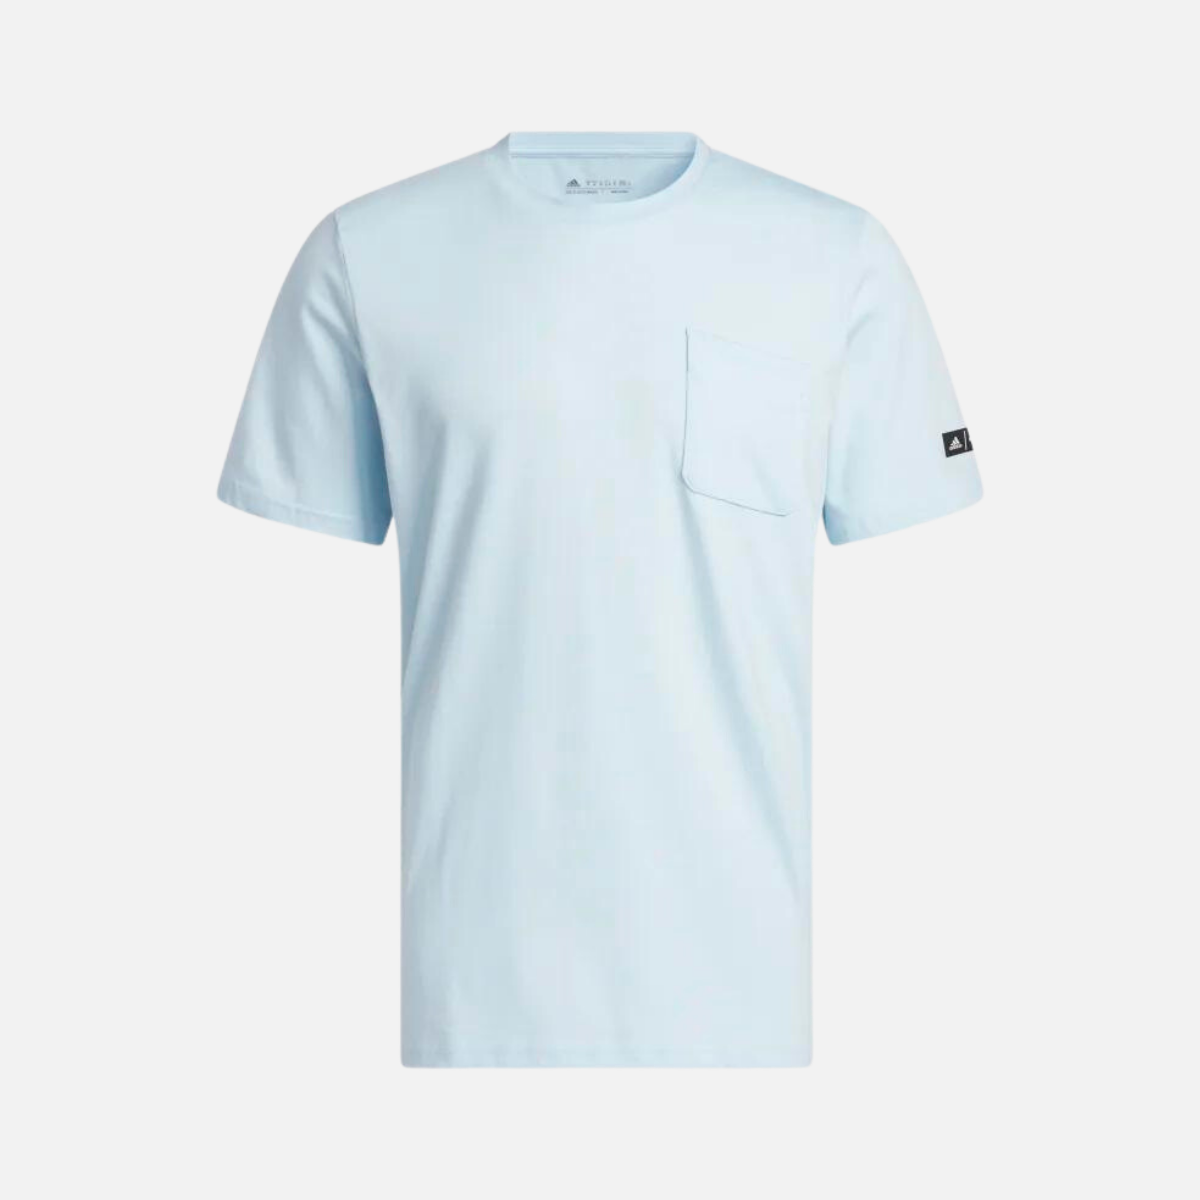 Adidas X Marimekko Pocket Men Sportswear T-shirt -IceBlue